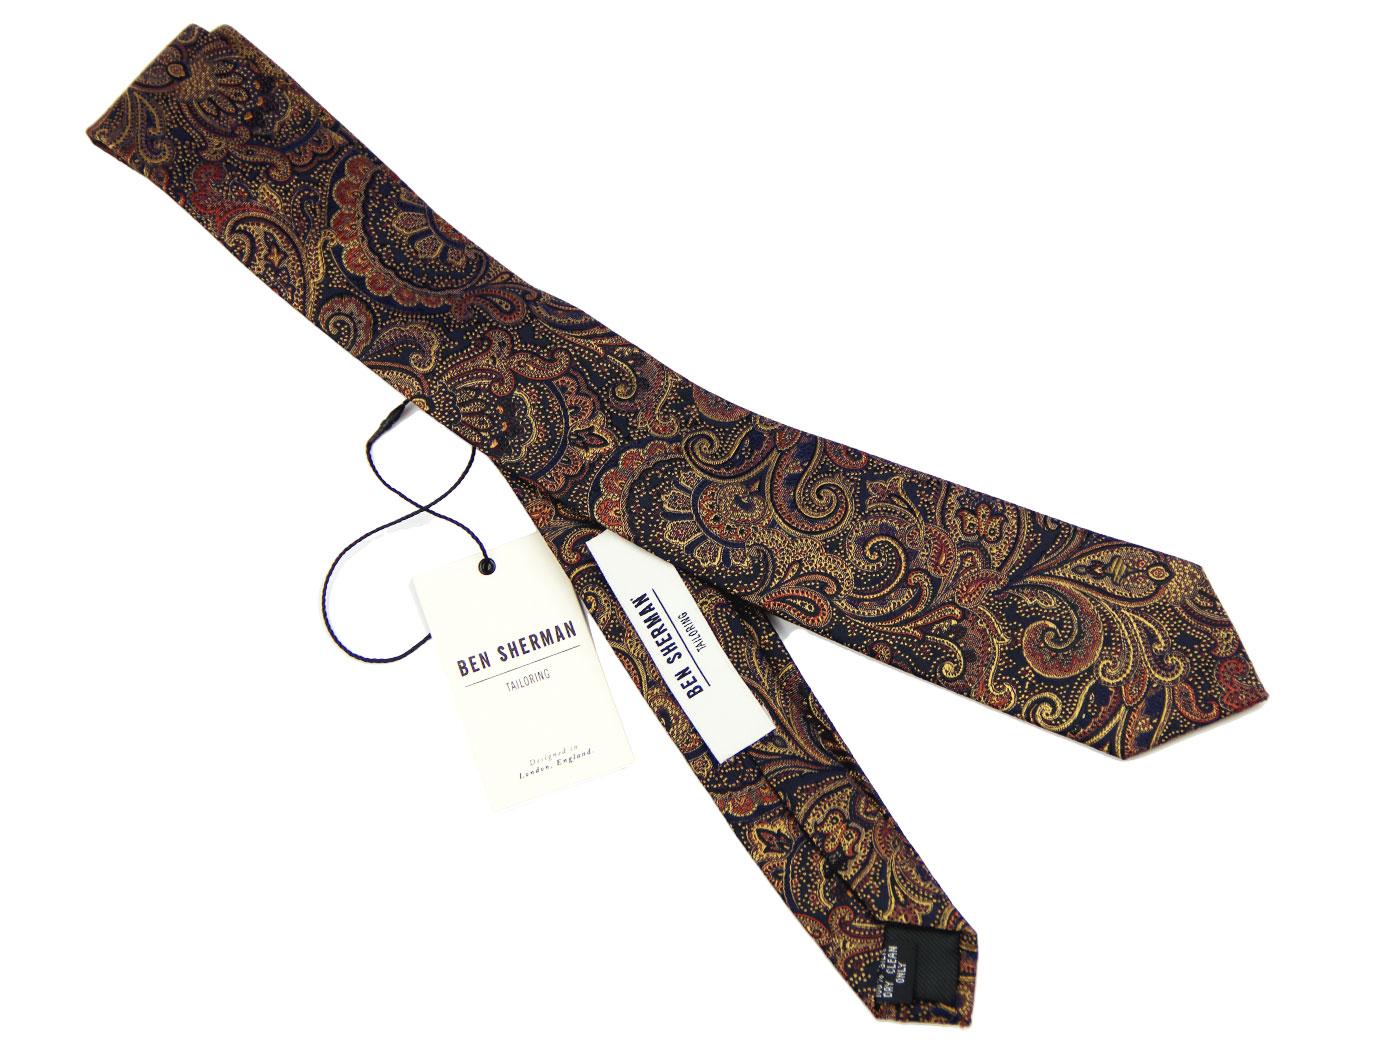 Ben Sherman Tailoring Retro 60s Mod Paisley Tie in Peacoat